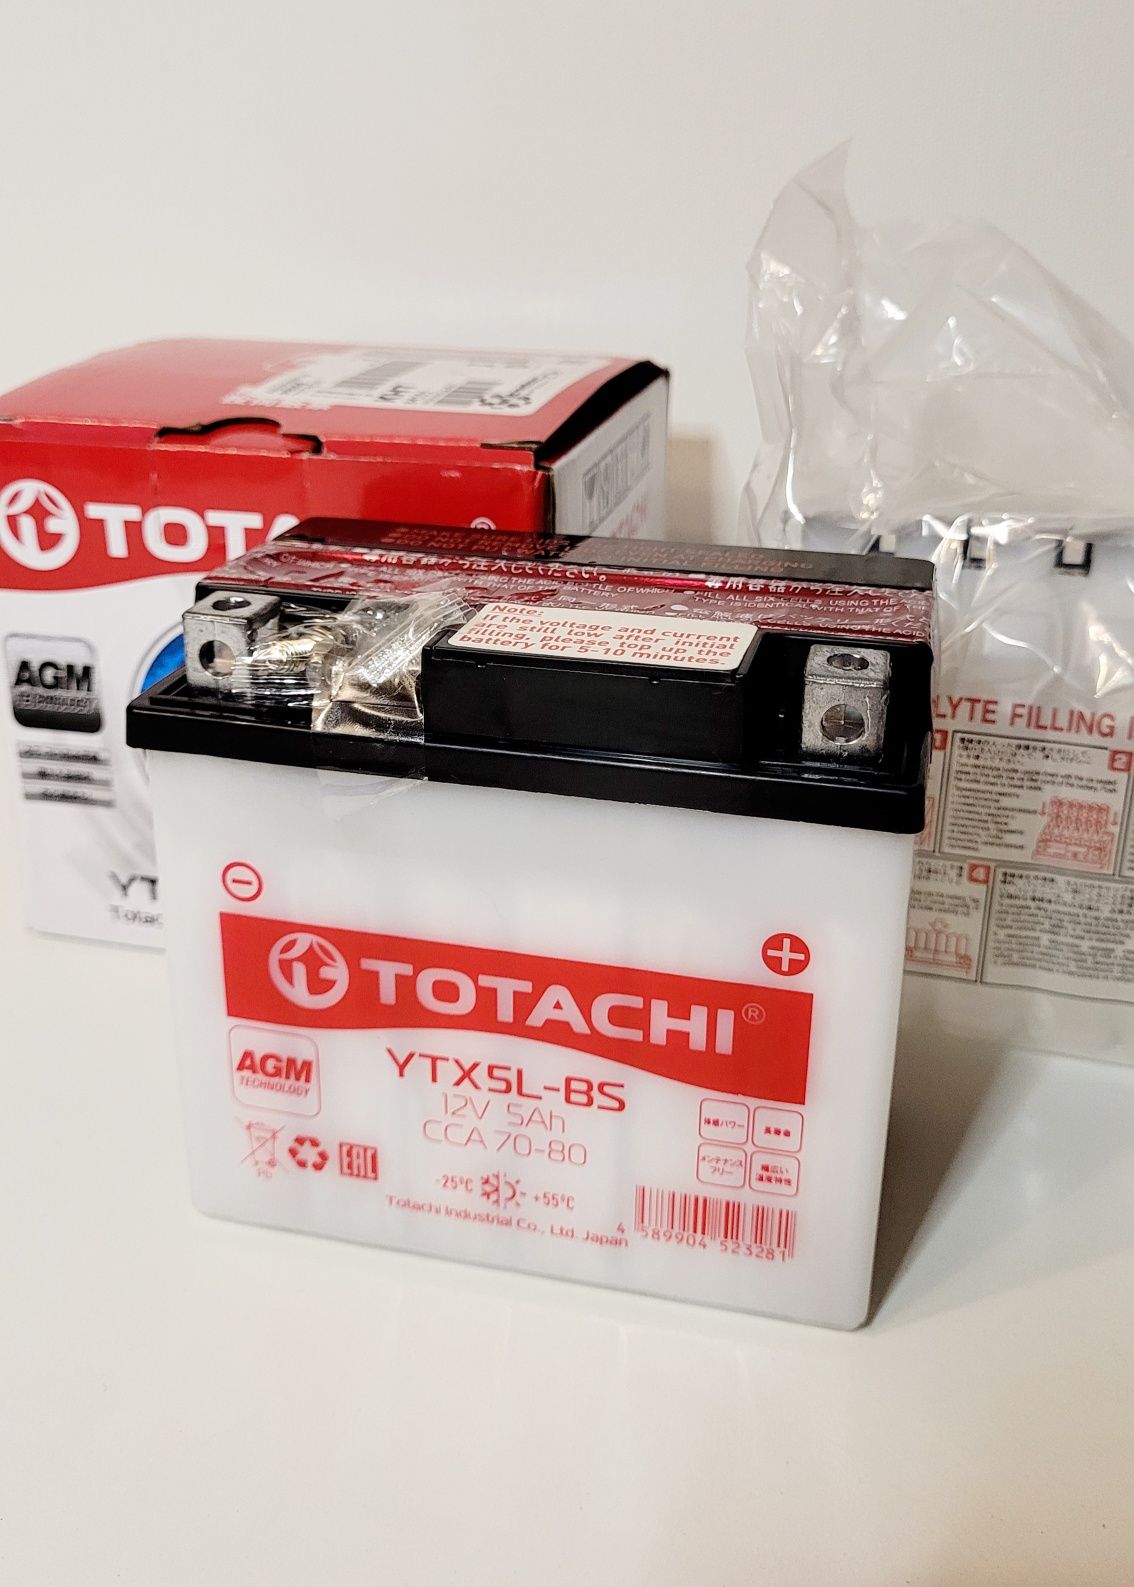 Аккумулятор Totachi 5Ah для мопеда, скутера, мотоцикла, квадроцикла.